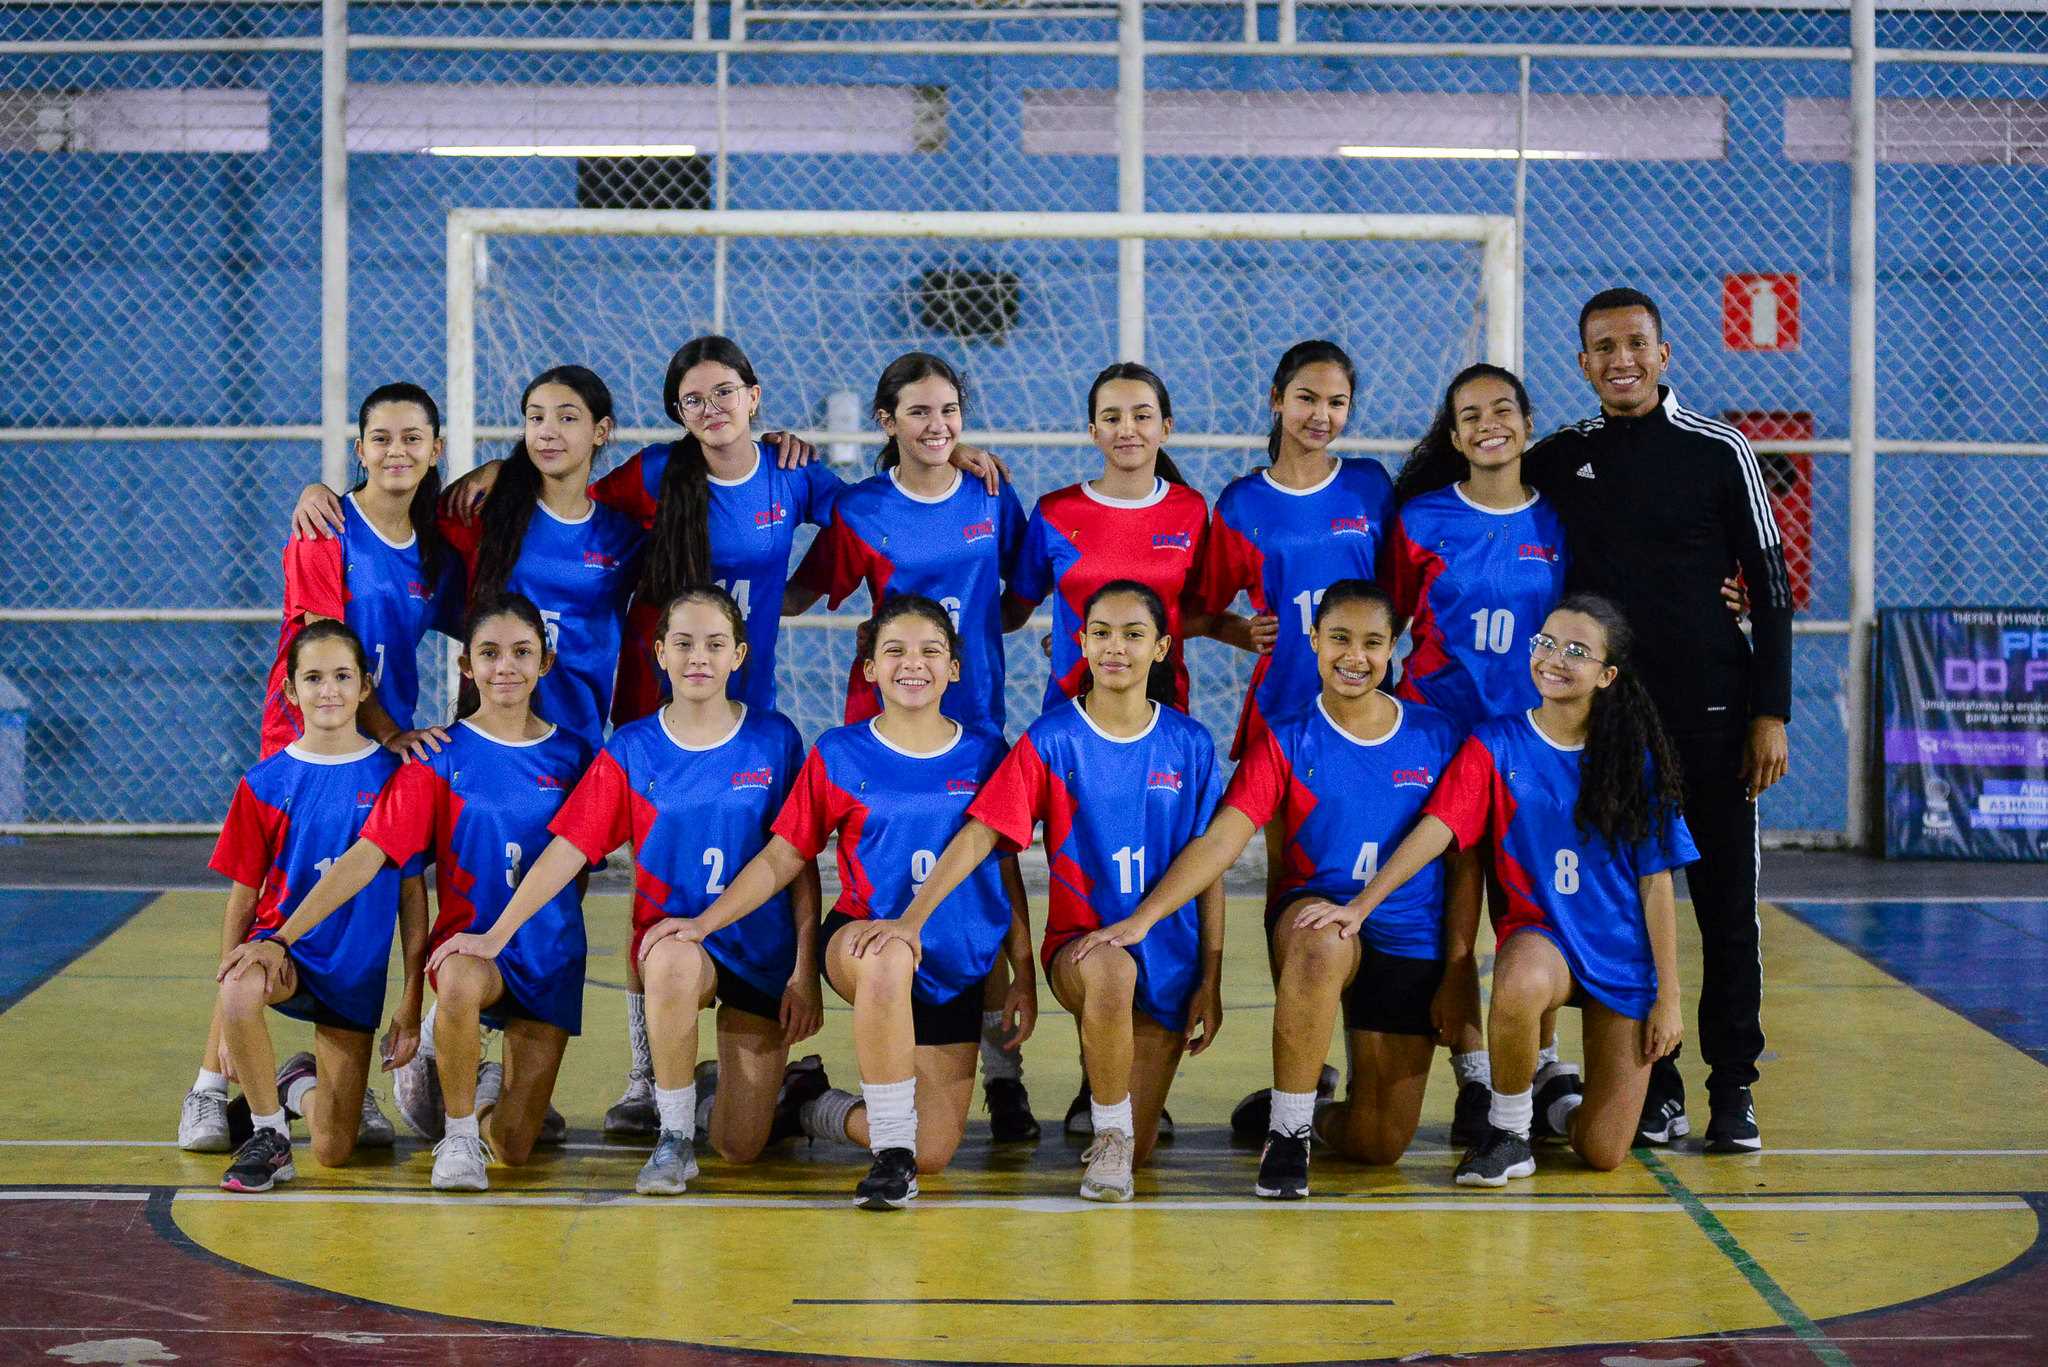 Festival Carioca de Futsal Feminino de 2023 - Sub 14 - Quadra 2 